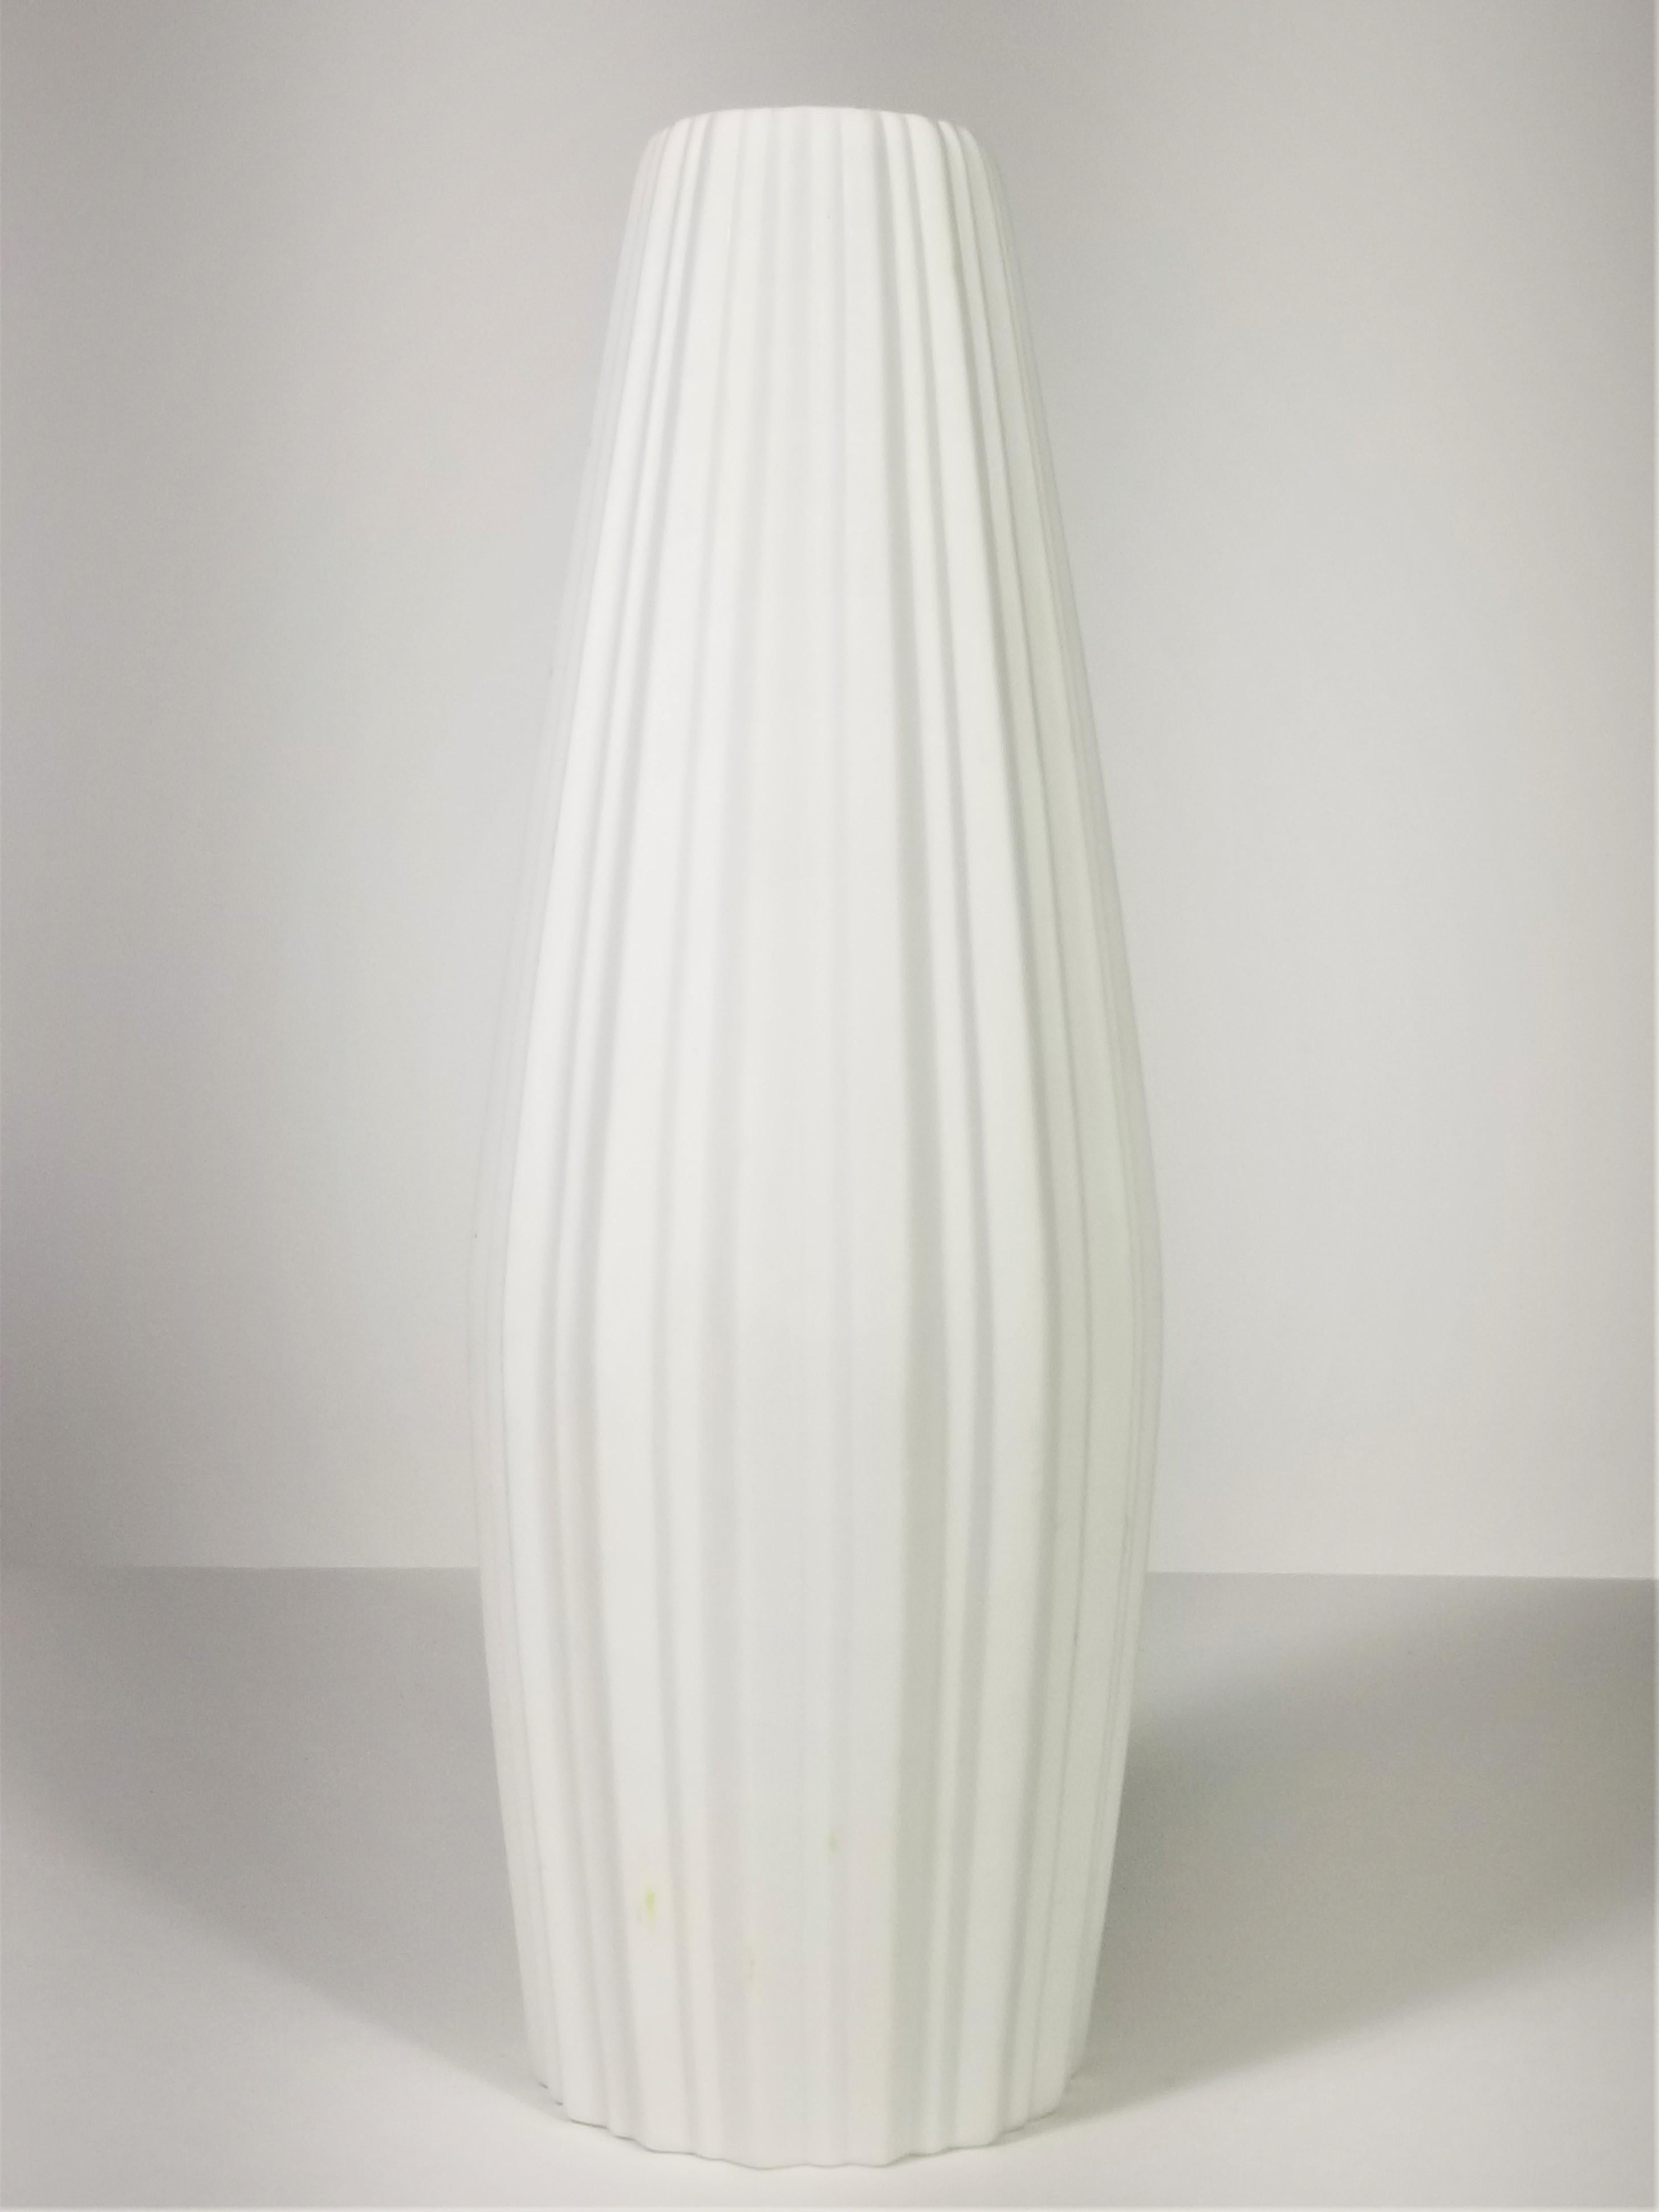 Heinrich Bavaria - 6 For Sale on 1stDibs | h&c selb bavaria germany  heinrich vase, bavaria vase porcelain, h&c selb bavaria vase